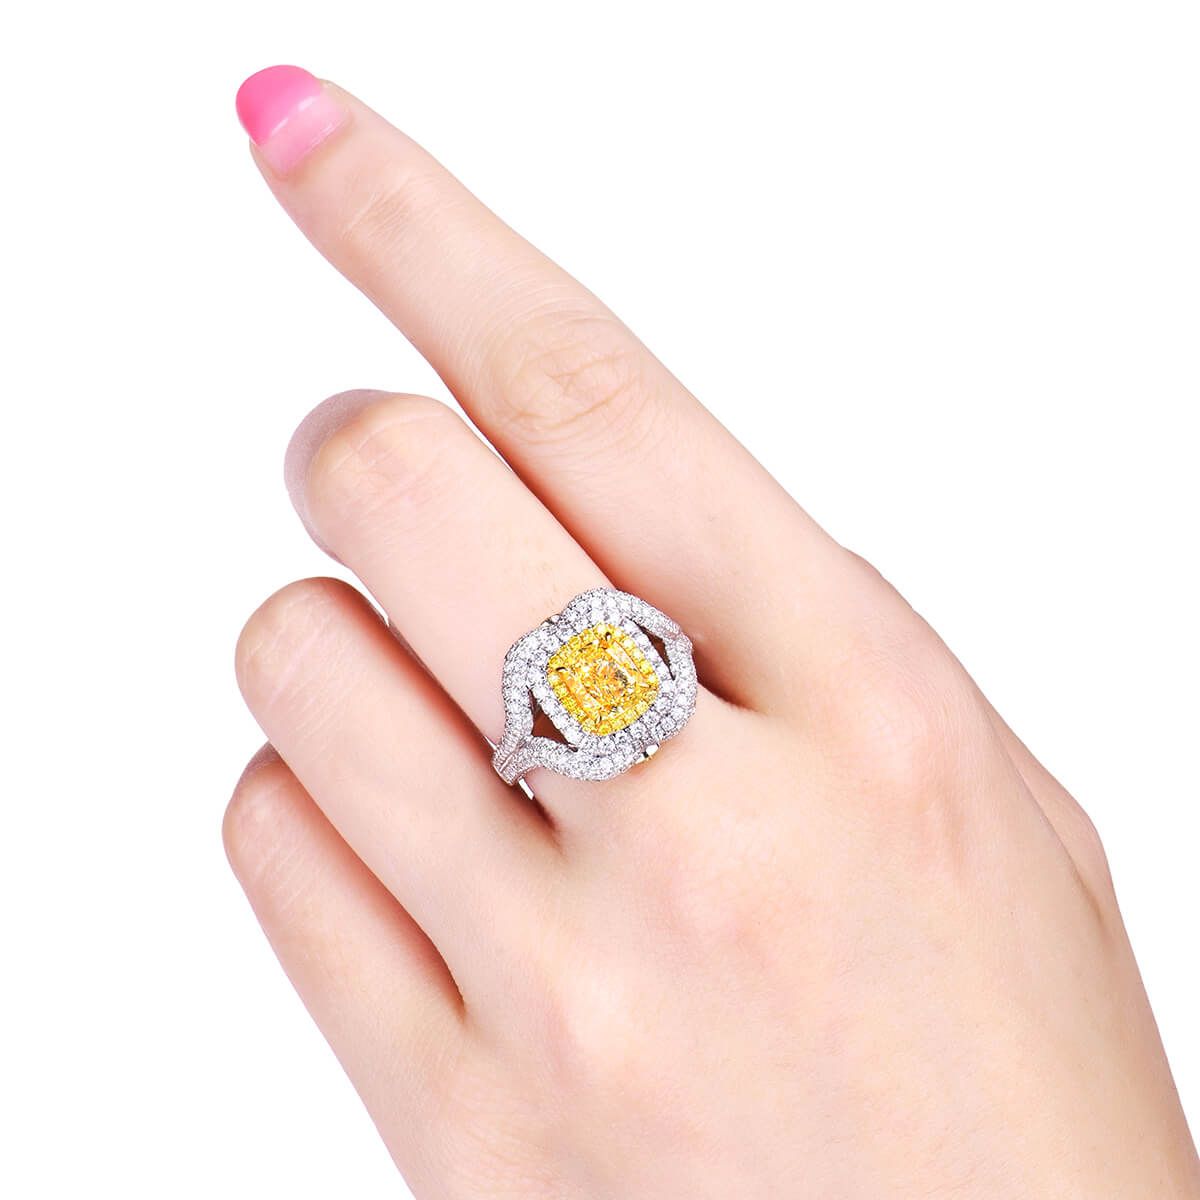 Fancy Light Yellow Diamond Ring, 1.47 Ct. (3.12 Ct. TW), Cushion shape, GIA Certified, 6245228070